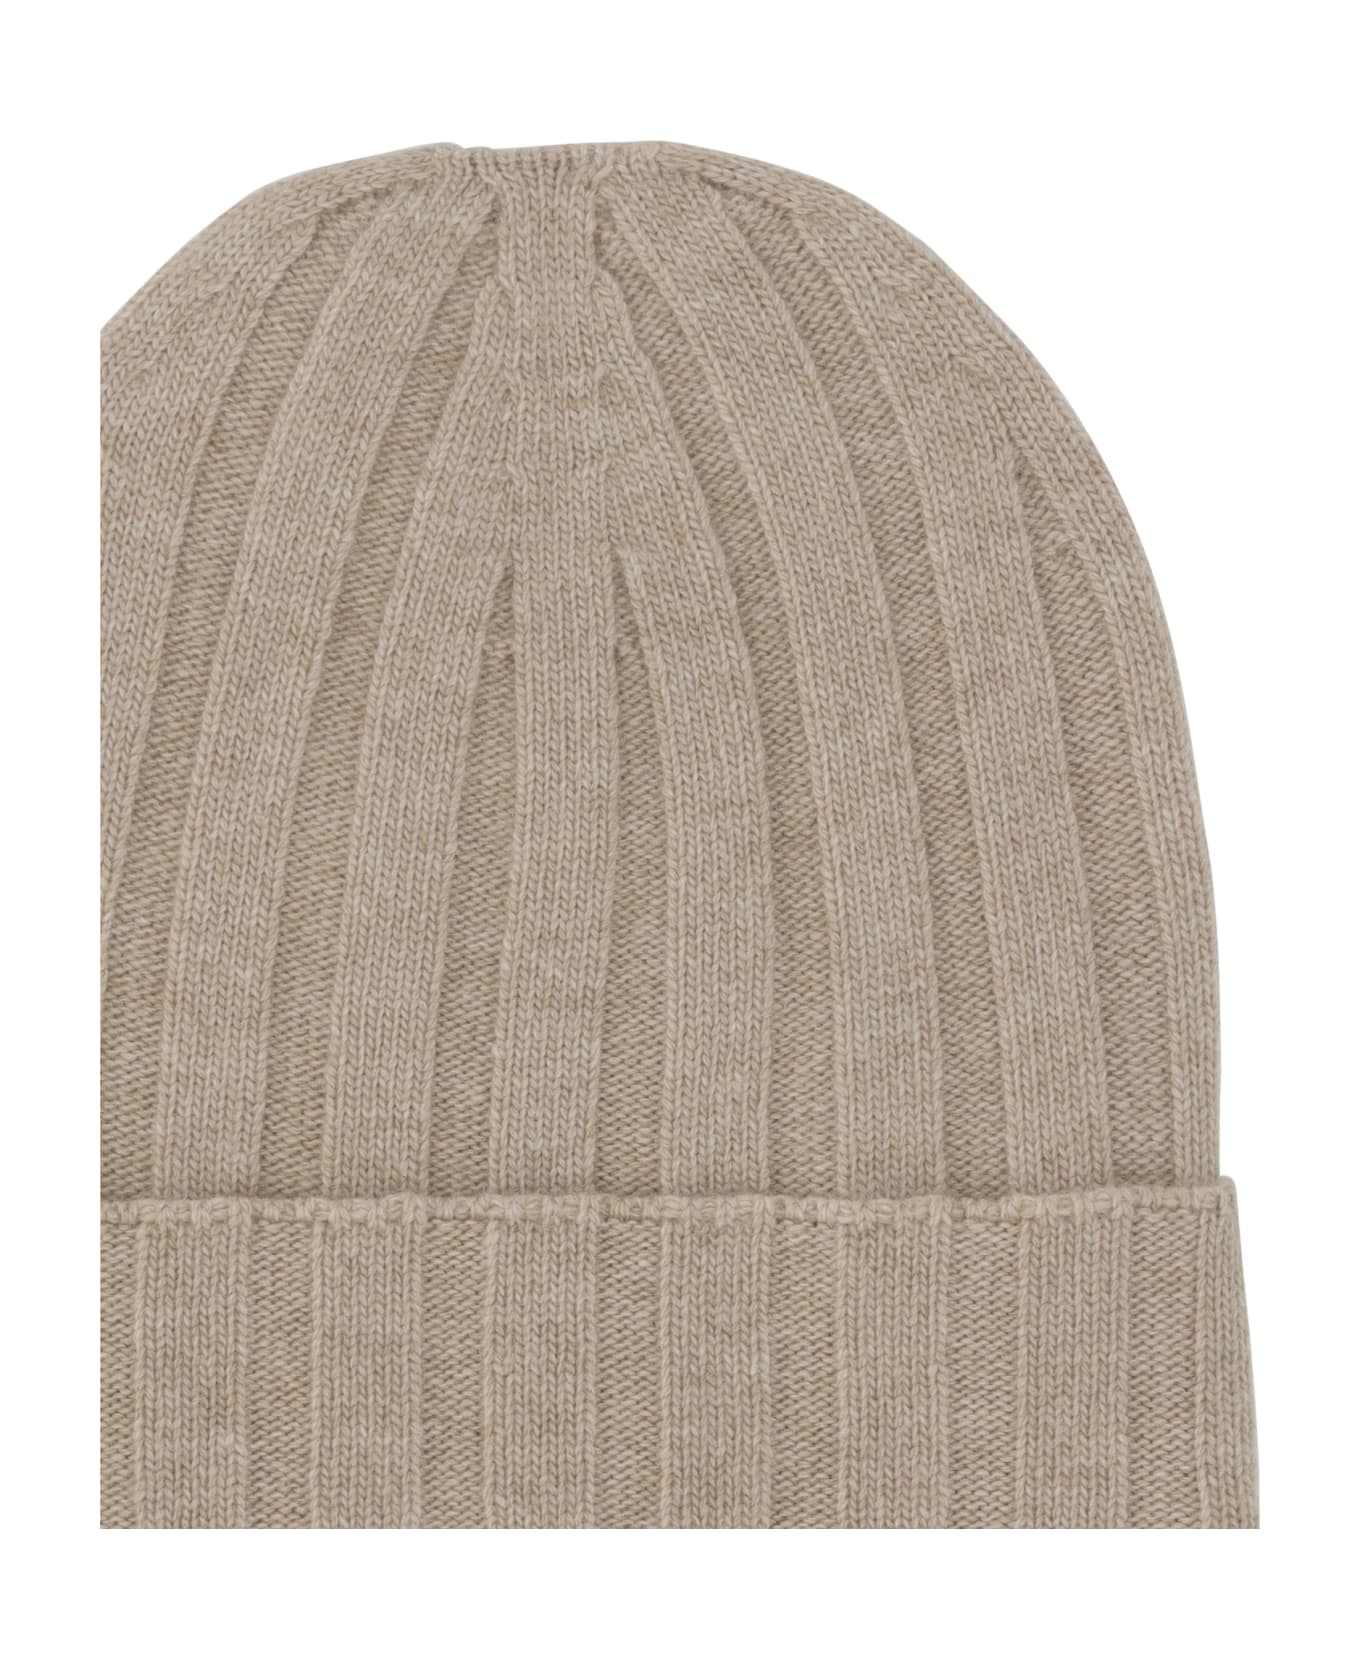 Dolce & Gabbana Beanie Hat - Sabbia 帽子